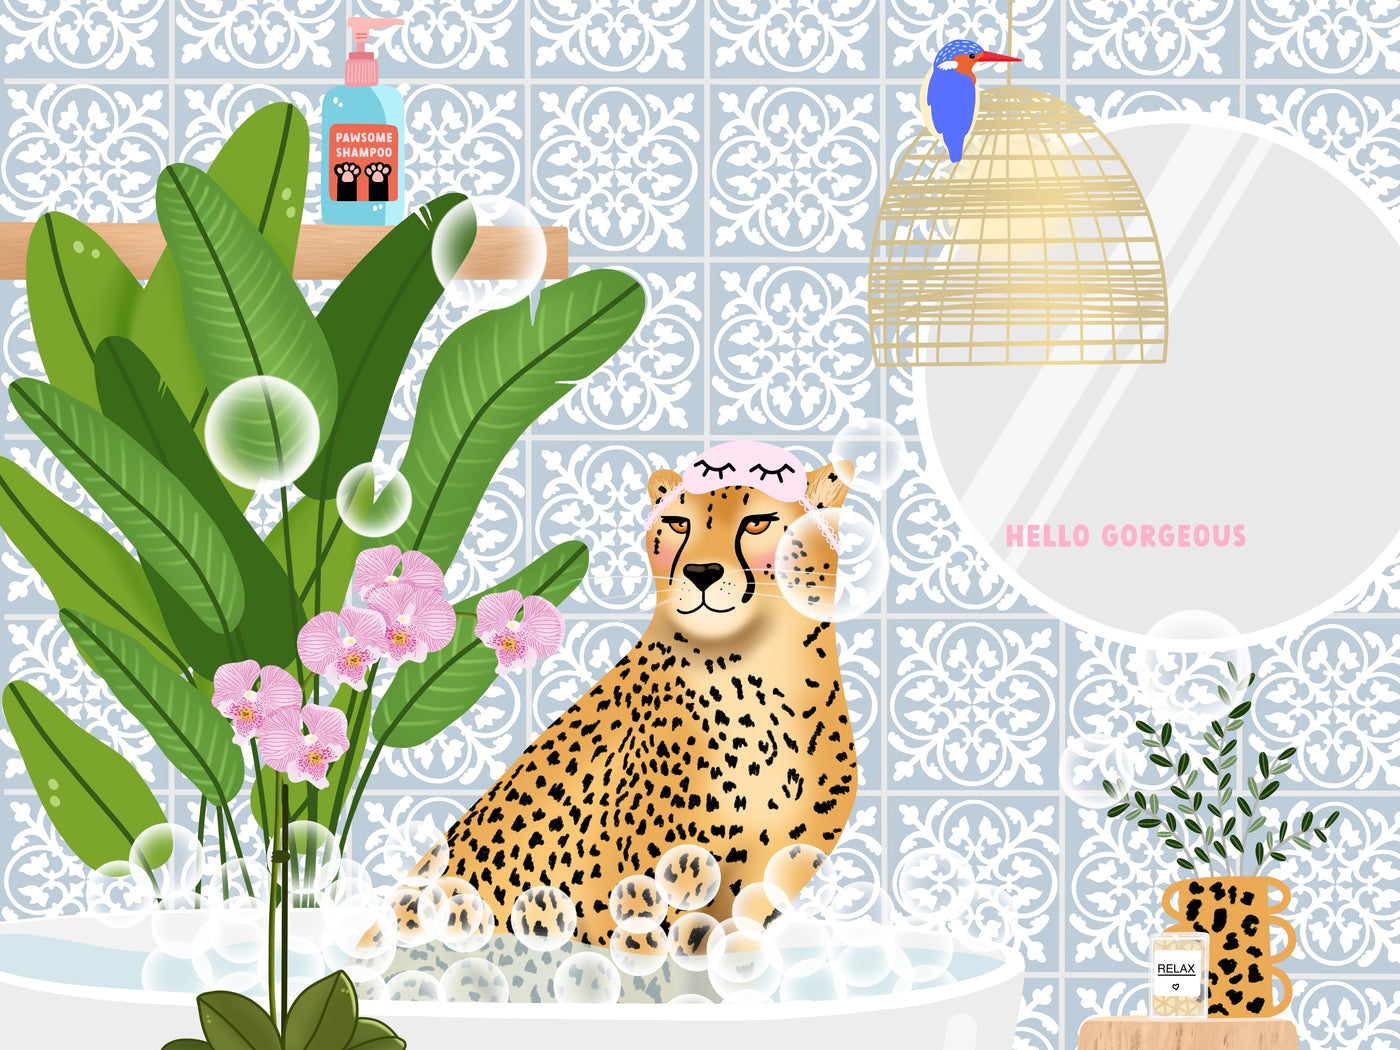 Cheetah Bathtub Print